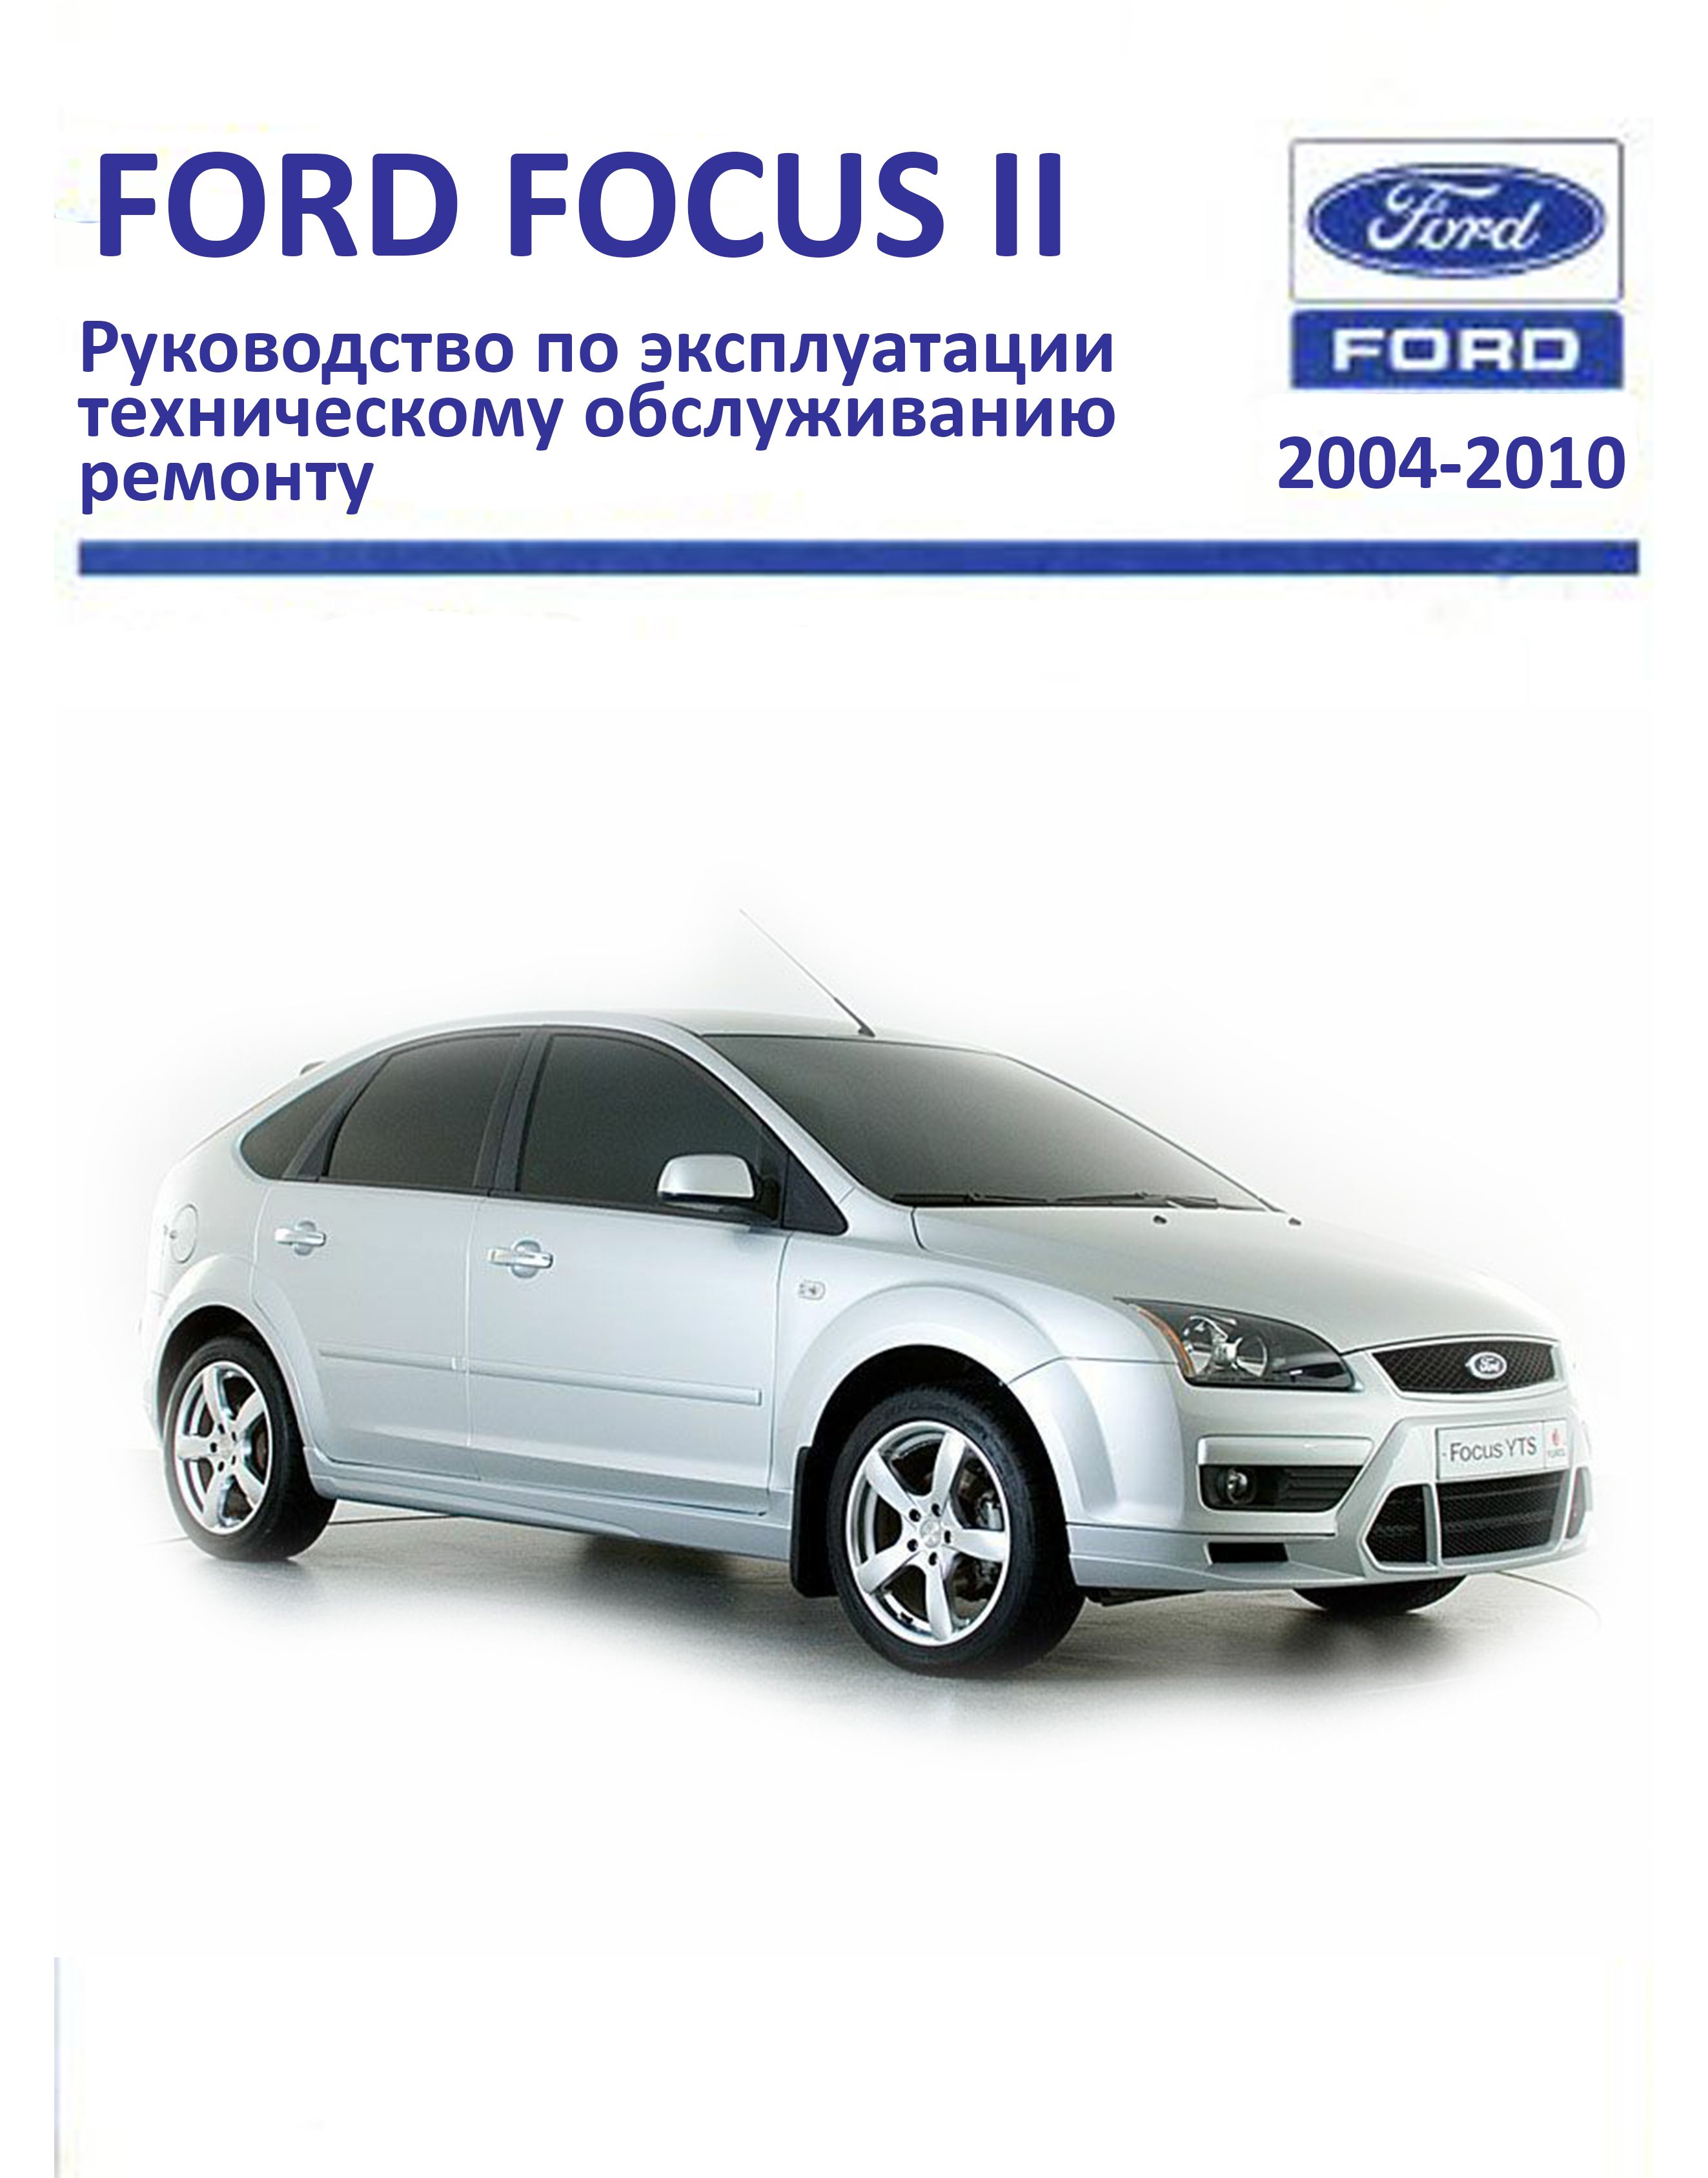 Ford Focus II 1.8/ 2.0 л устройство, обслуживание, эксплуатация и ремонт обложка